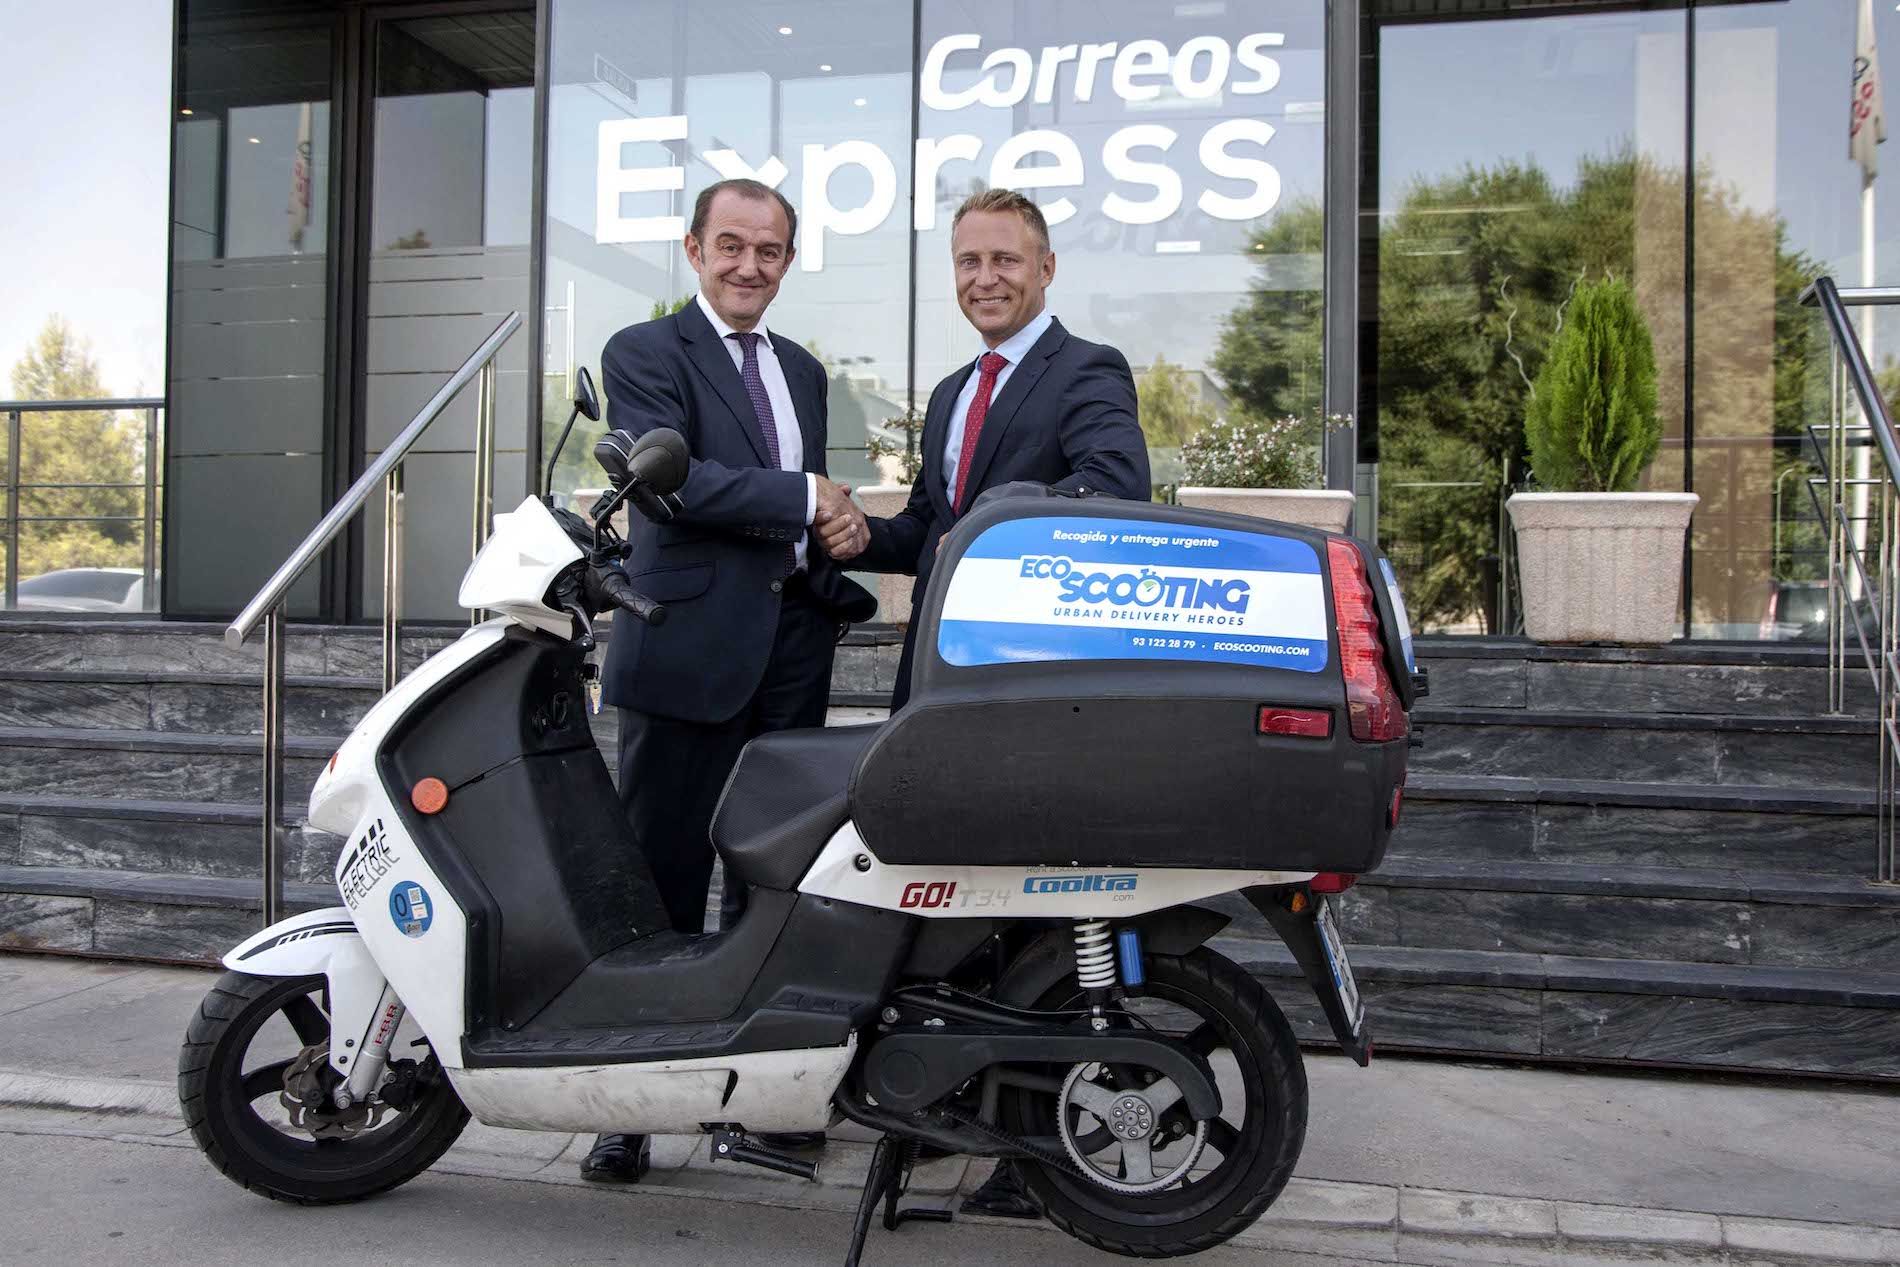 EcoScooting acuerdo con Correos Express2